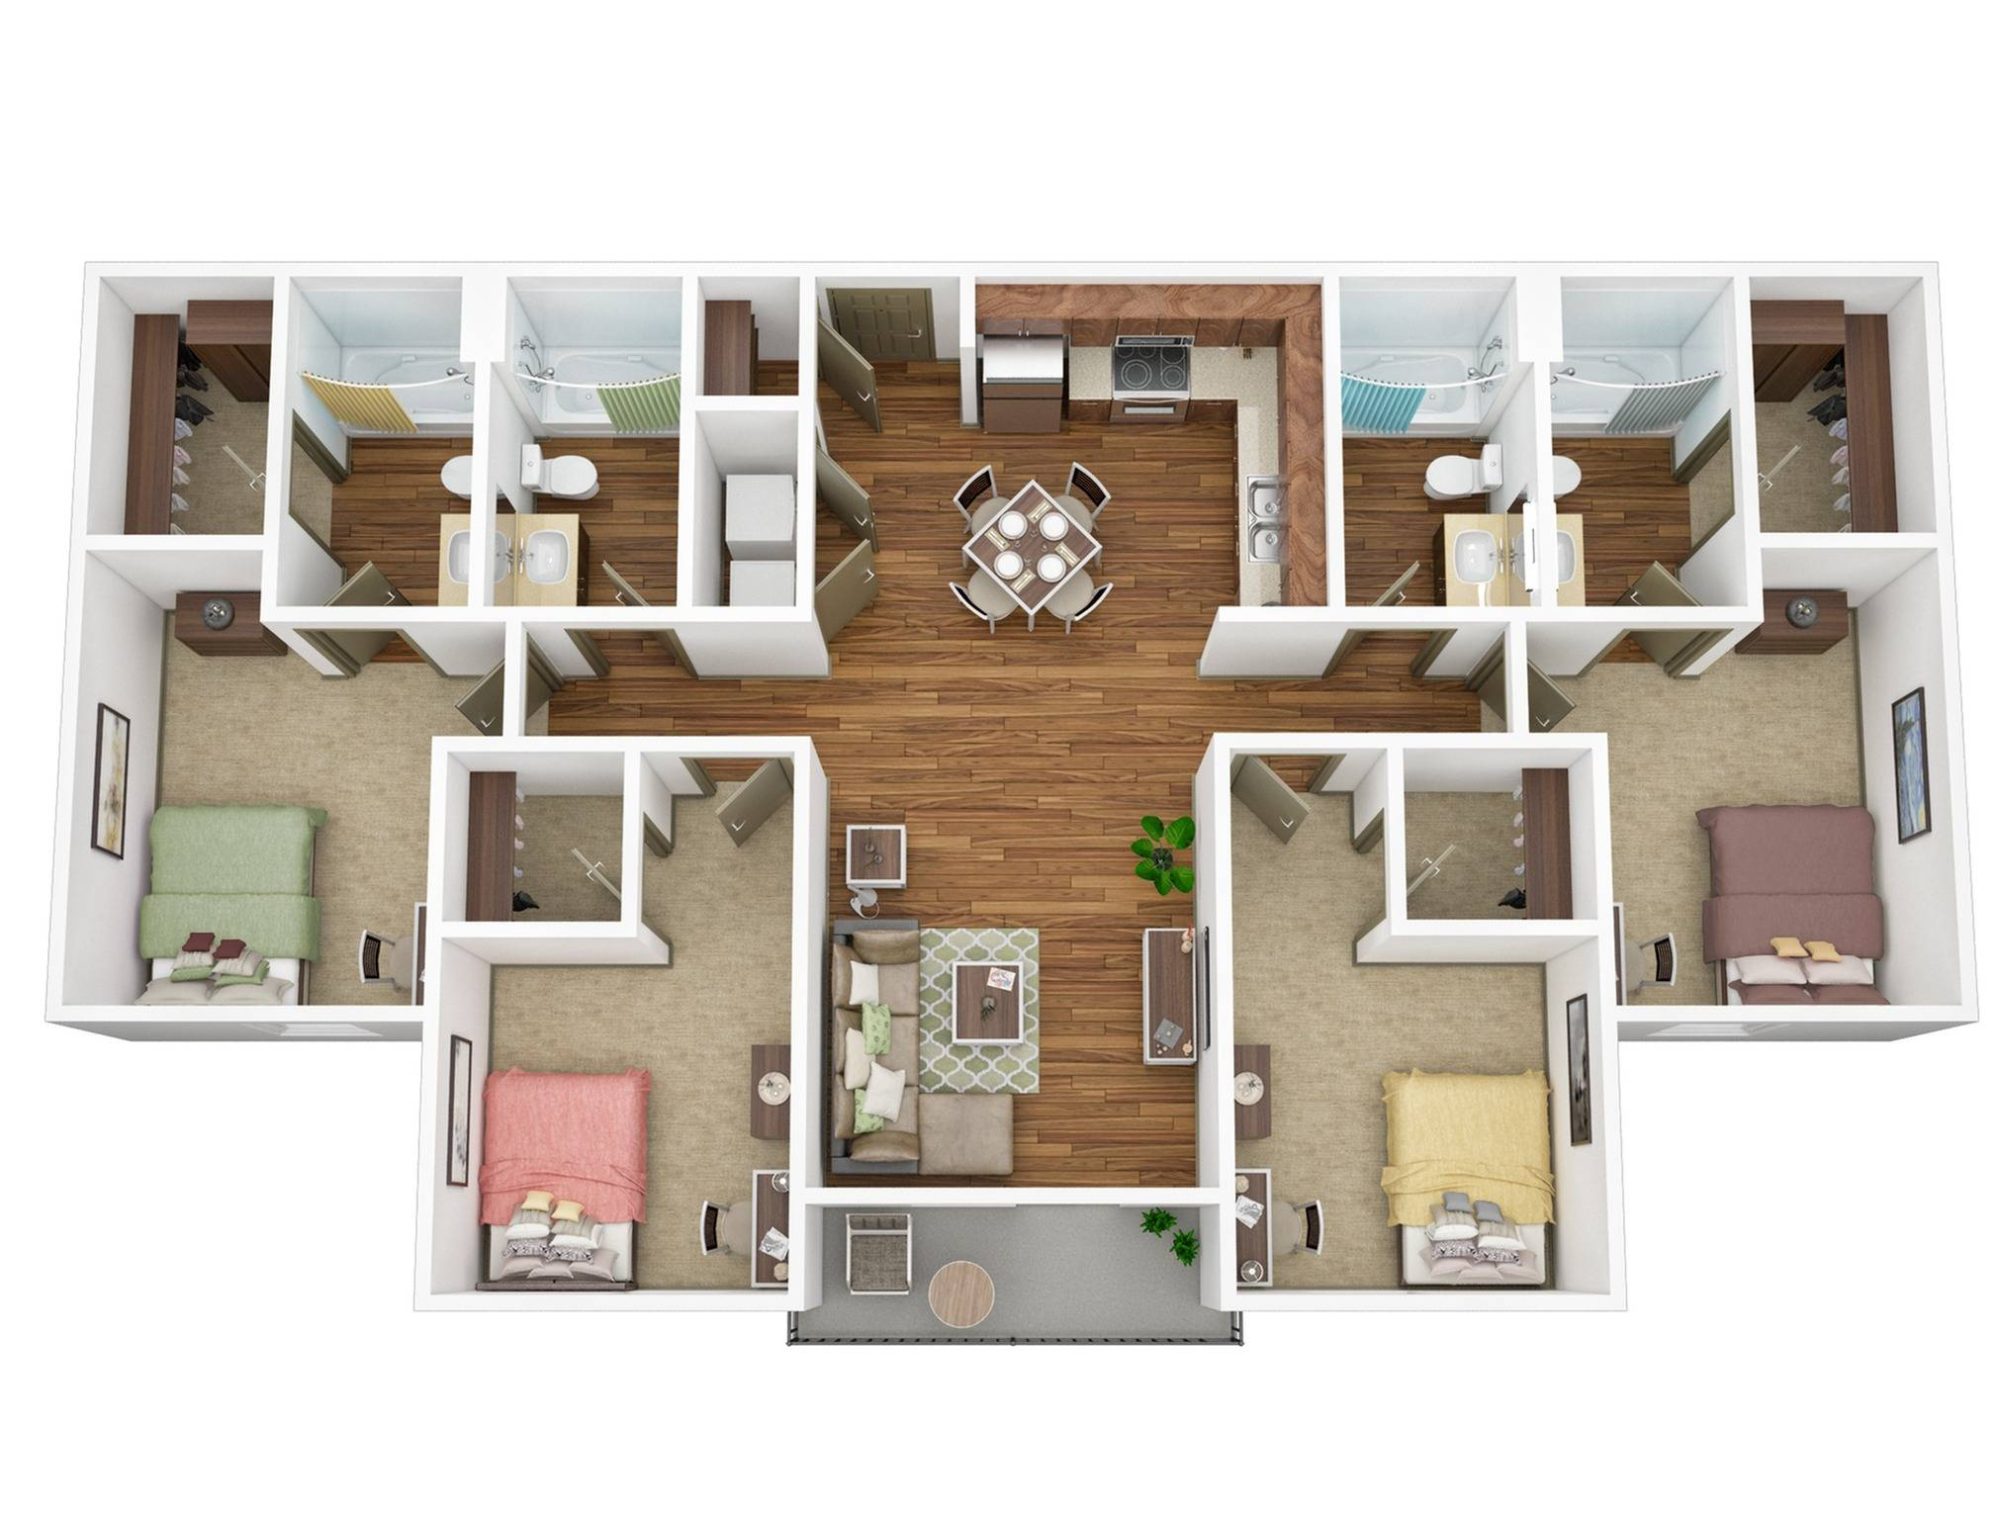 A 3D image of the 4BR/4BA – Classic floorplan, a 1472 squarefoot, 4 bed / 4 bath unit